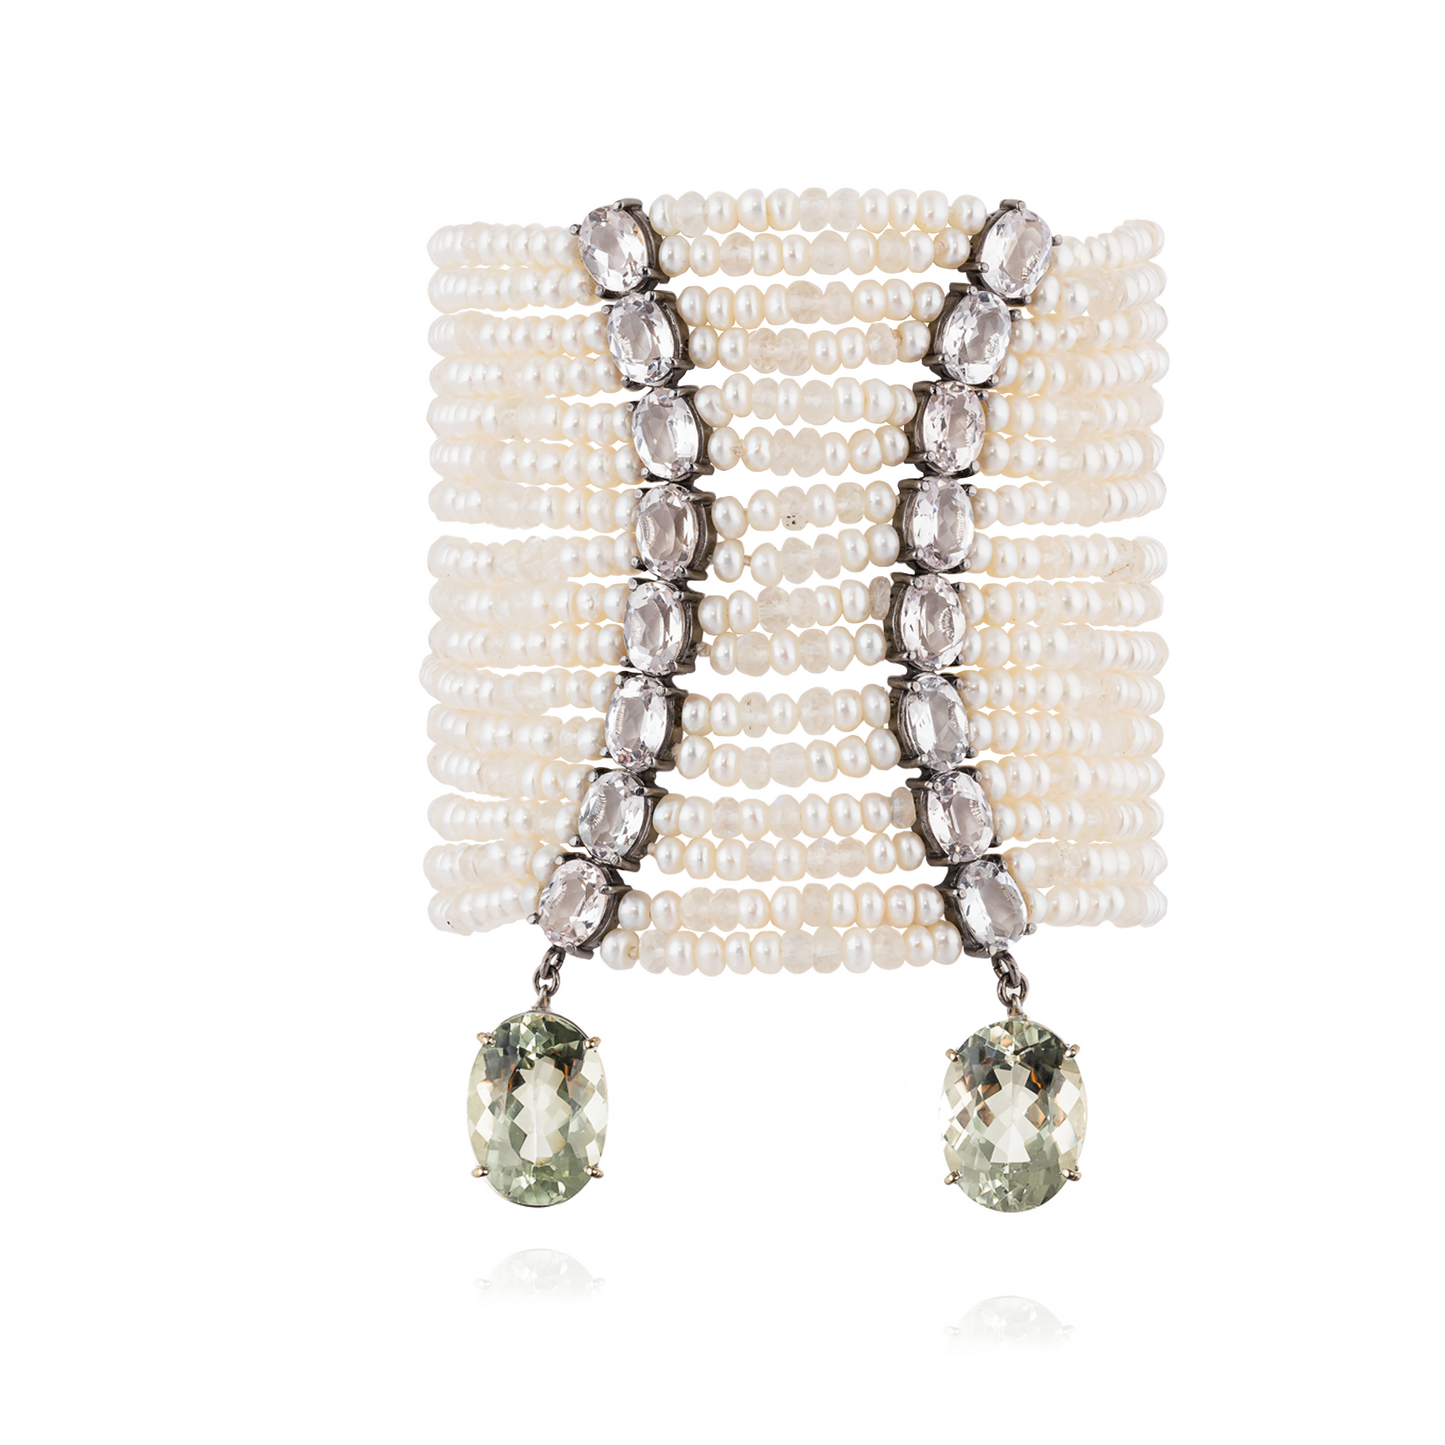 18k White Gold Bracelet with Pearls, Moonstones, Topaz and  Diamonds